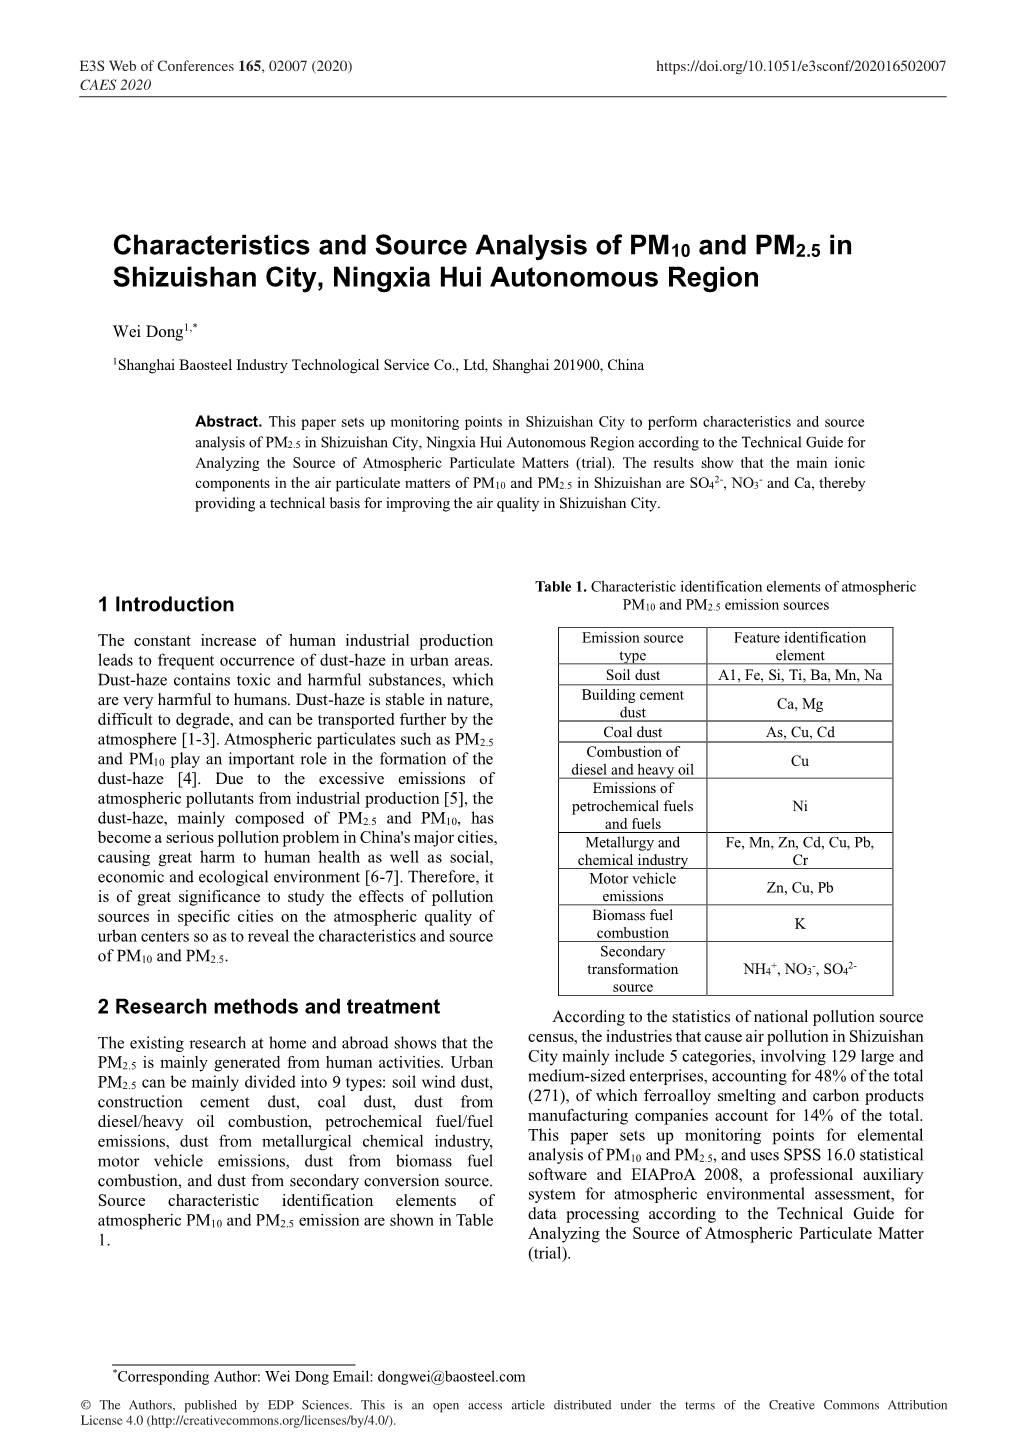 Characteristics and Source Analysis of PM10 and PM2.5 in Shizuishan City, Ningxia Hui Autonomous Region